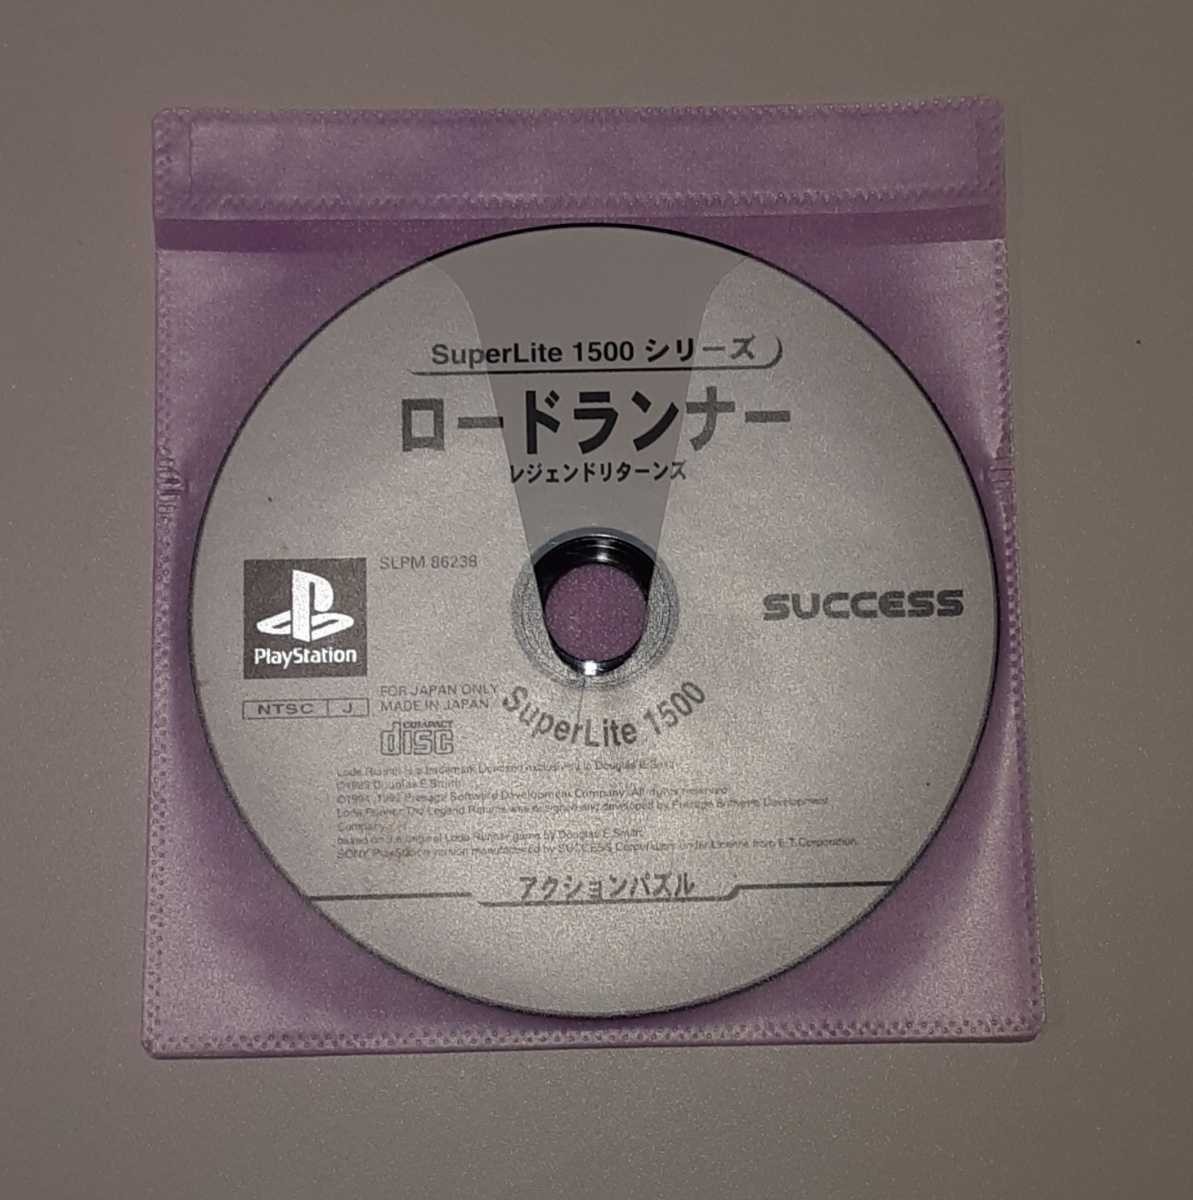 SuperLite1500 series Roadrunner Legend return zSONY PlayStation game soft Sony PlayStation PS1 PlayStation 1